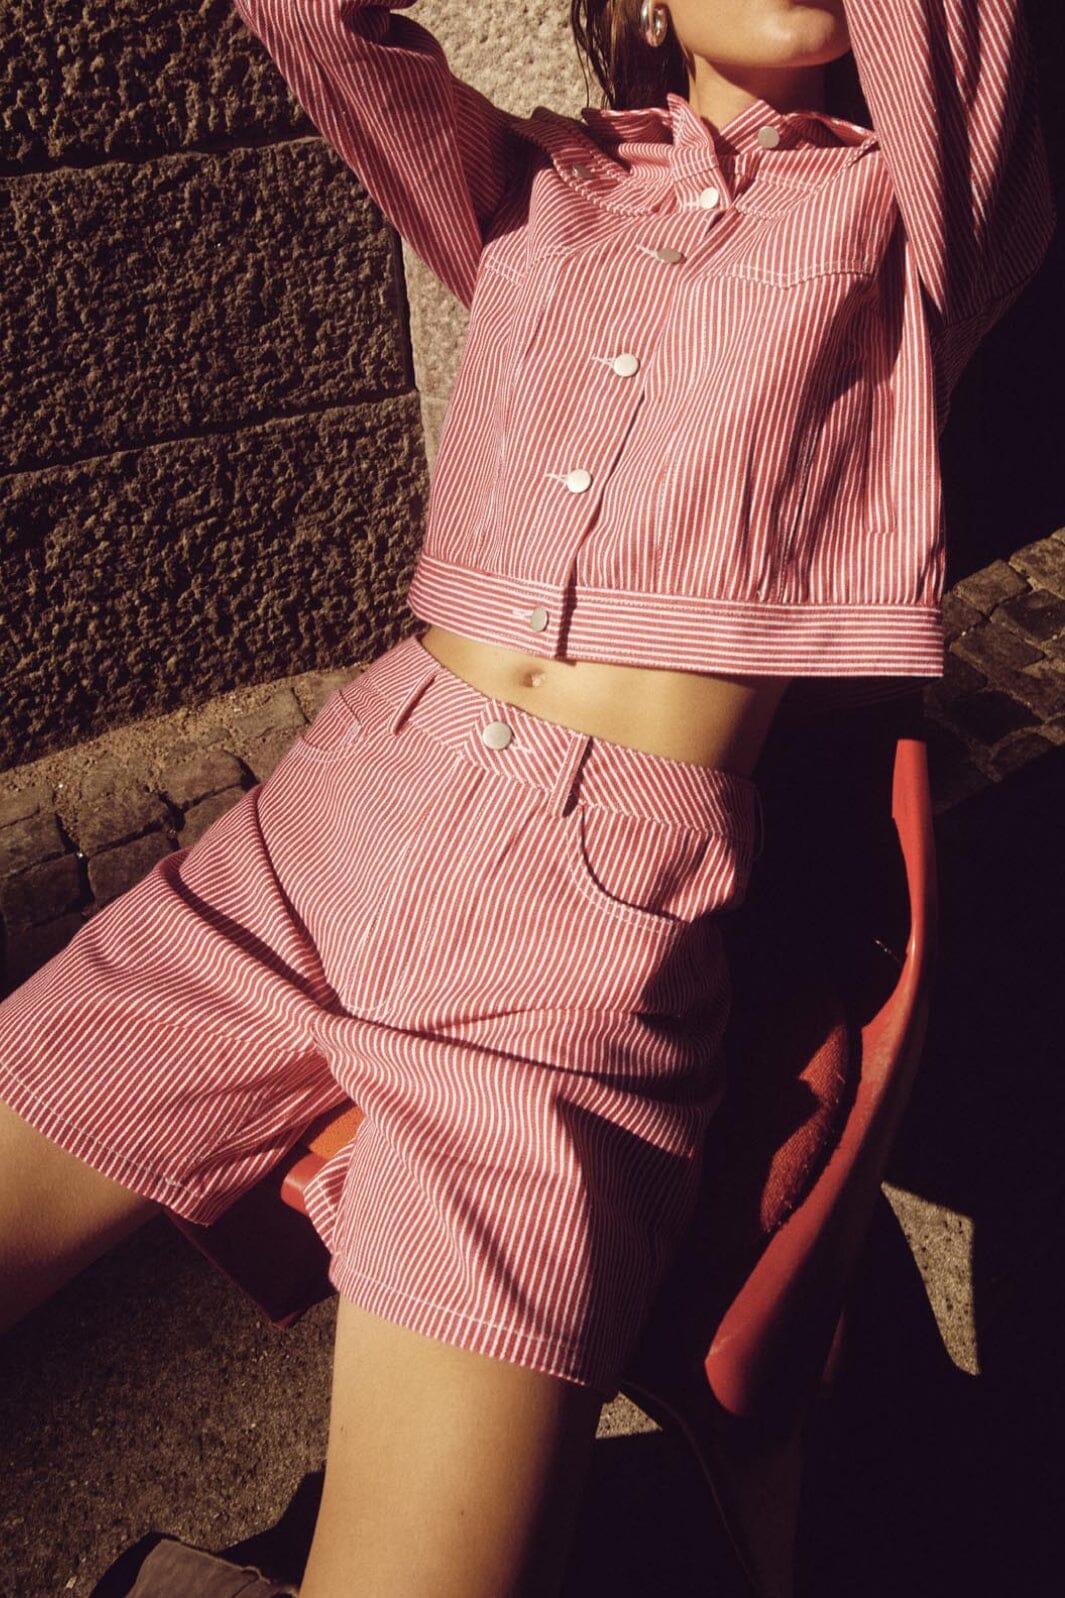 Noella - Spencer Shorts - 995 Red/White Stripe Shorts 